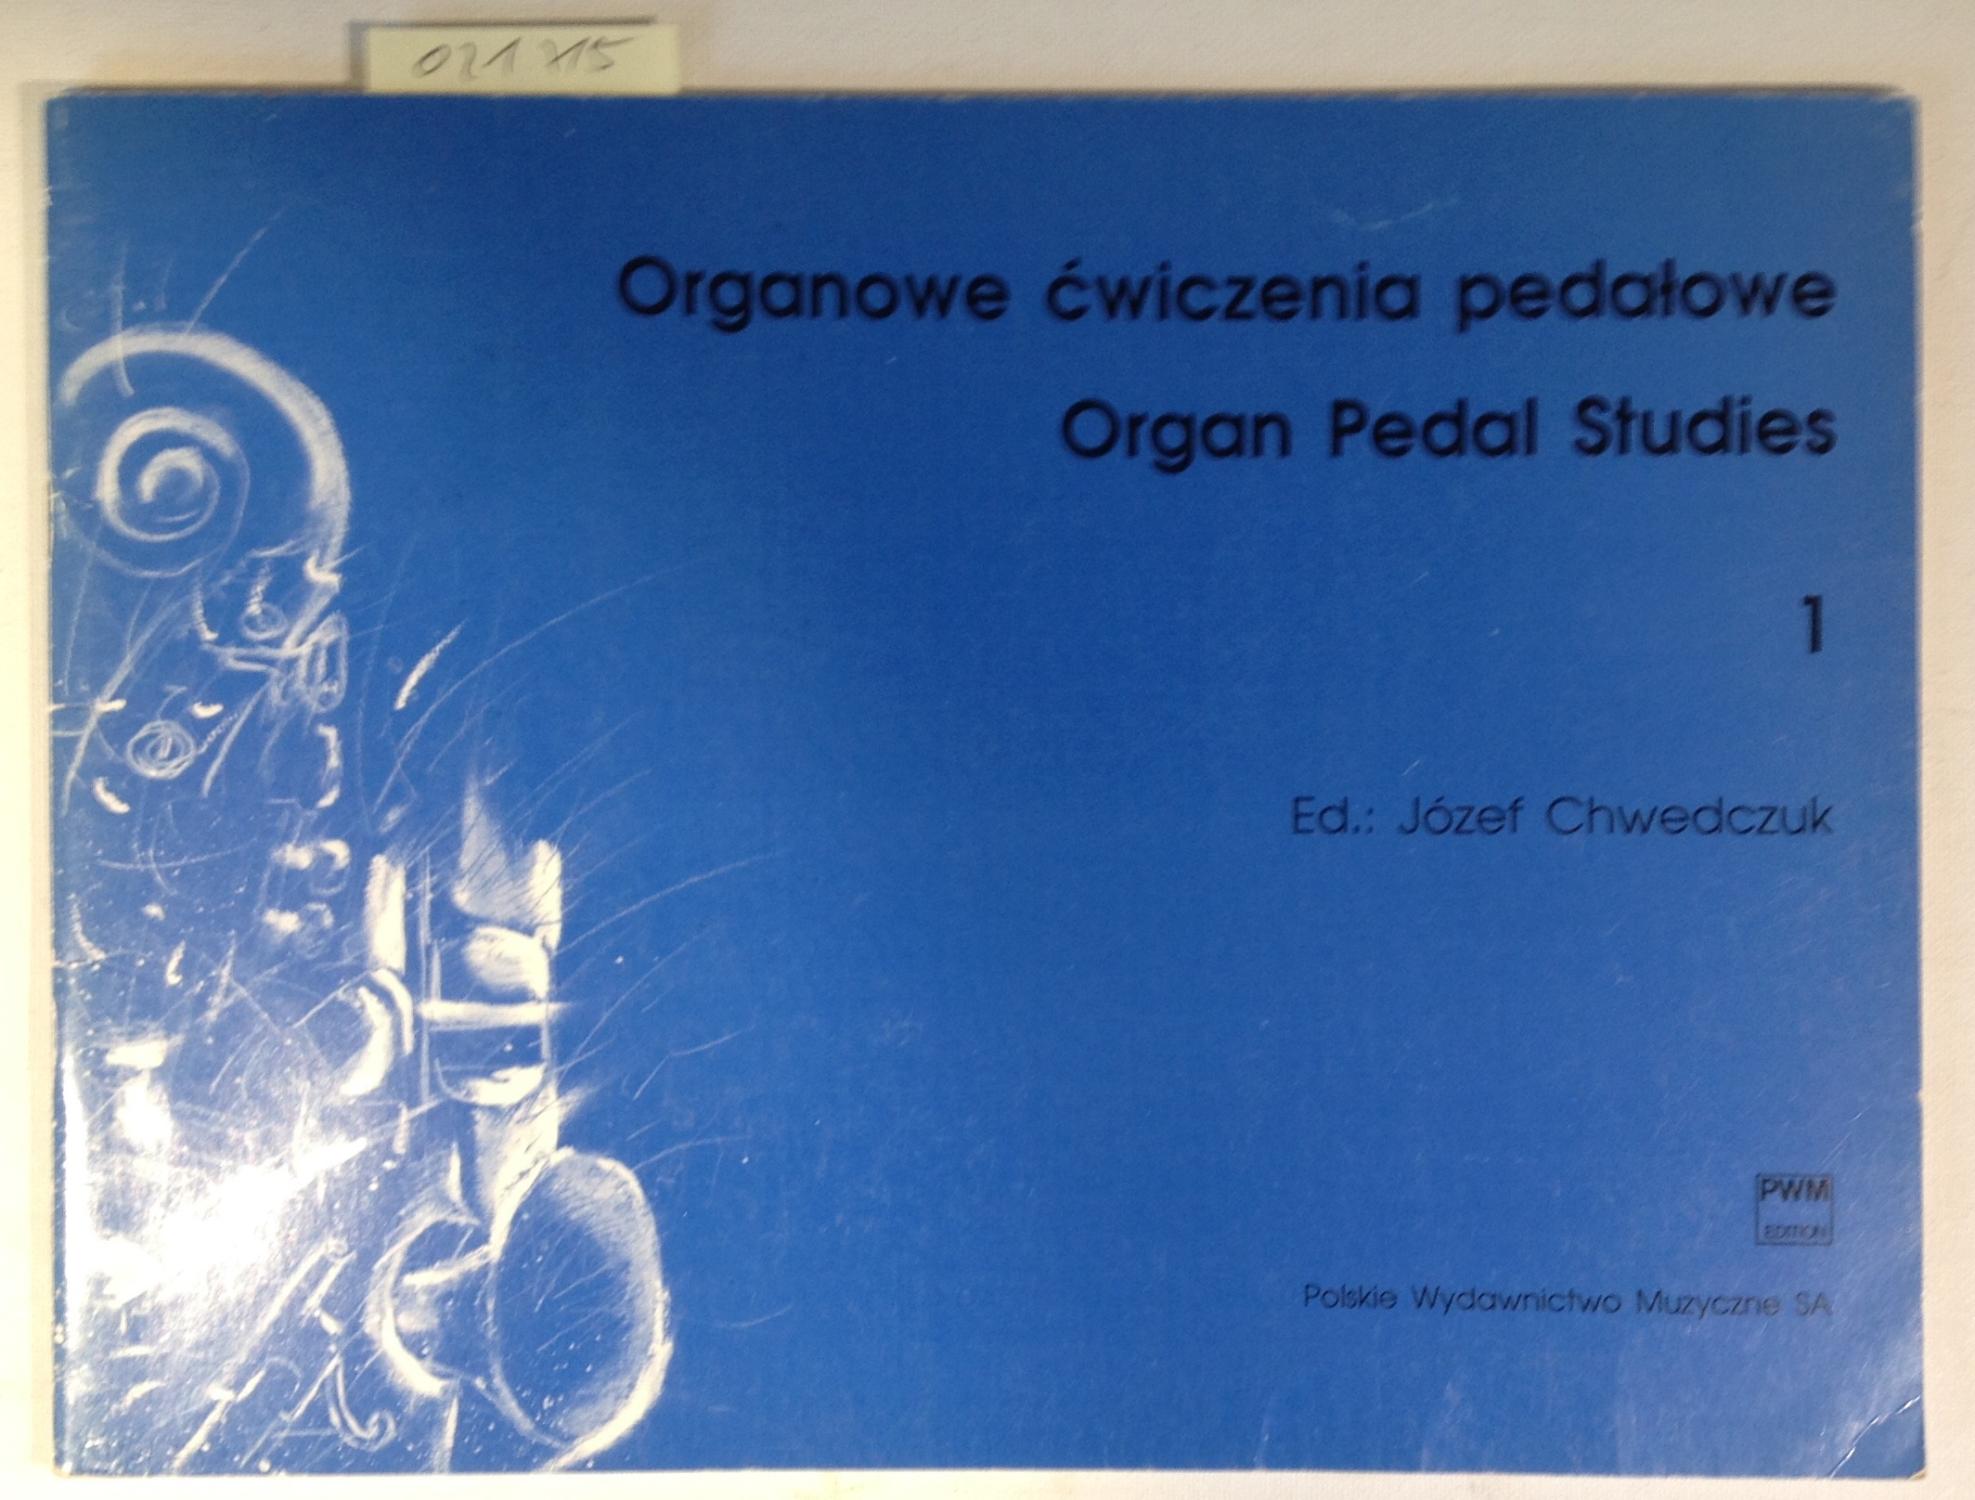 Organ Pedal Studies / Organowe cwiczenia pedalowe 1 - PWM 5943 - Chwedczuk, Josef - Herausgeber